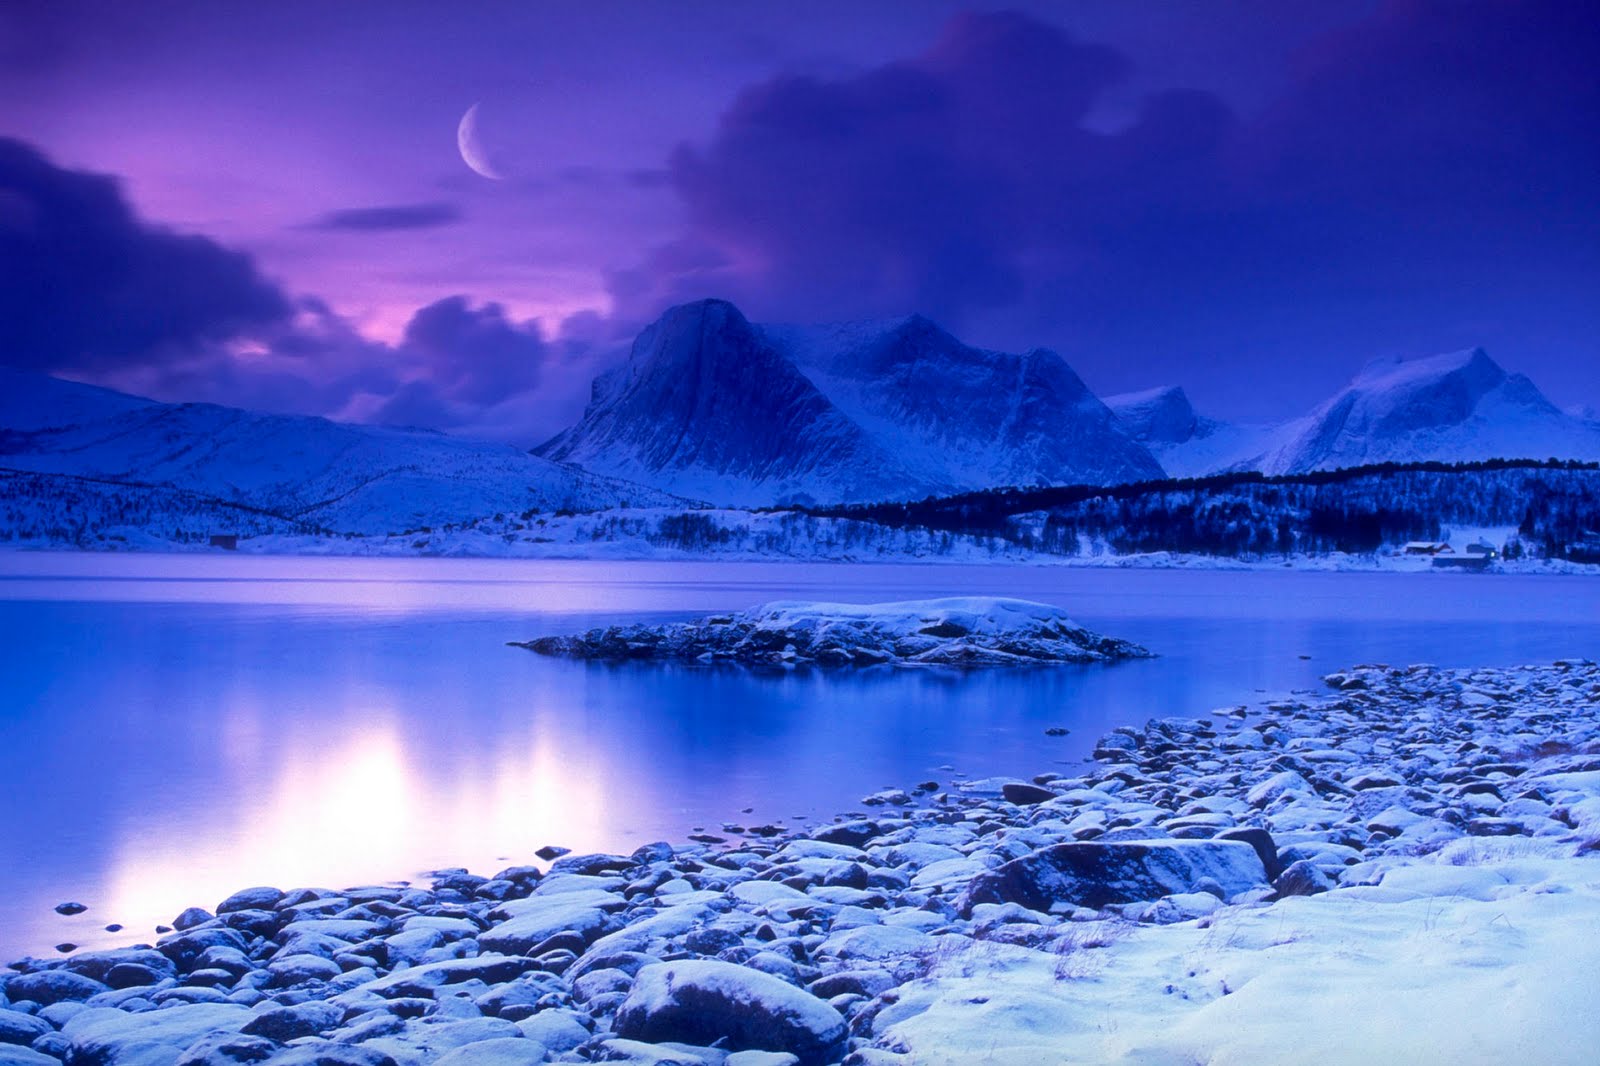 les fonds d'écran les plus cool,paysage naturel,la nature,ciel,bleu,océan arctique